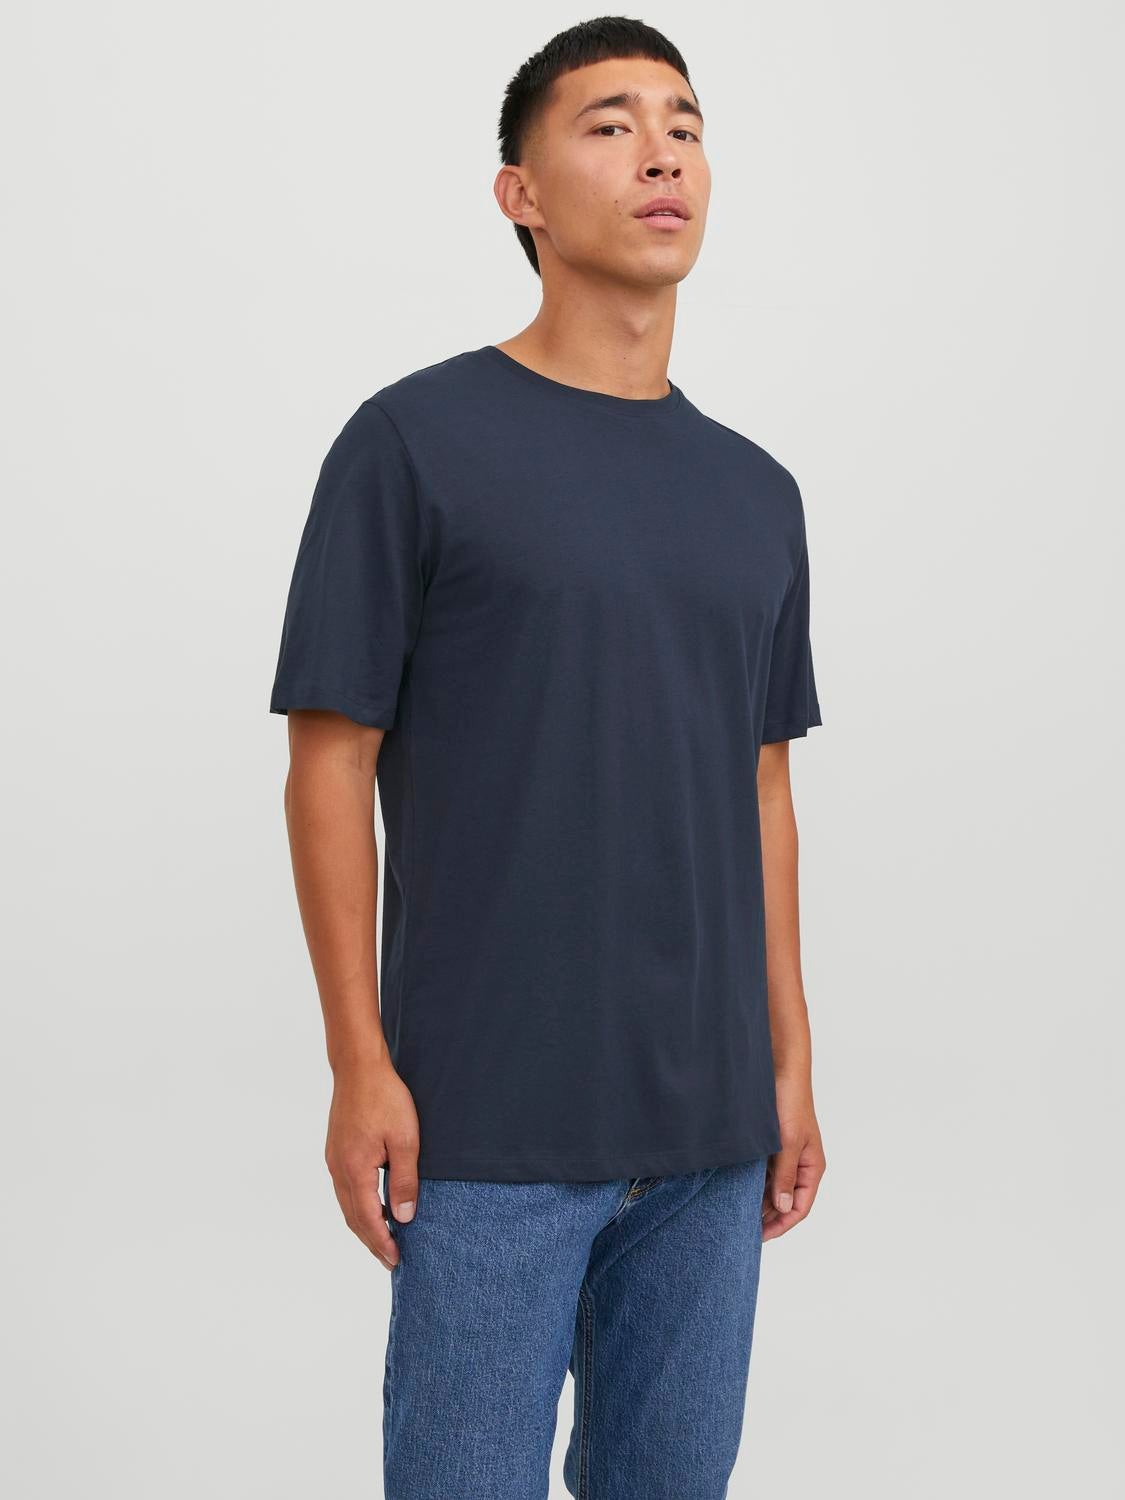 Jack & Jones T-Shirt Blau S Rabatt 54 % HERREN Hemden & T-Shirts Print 